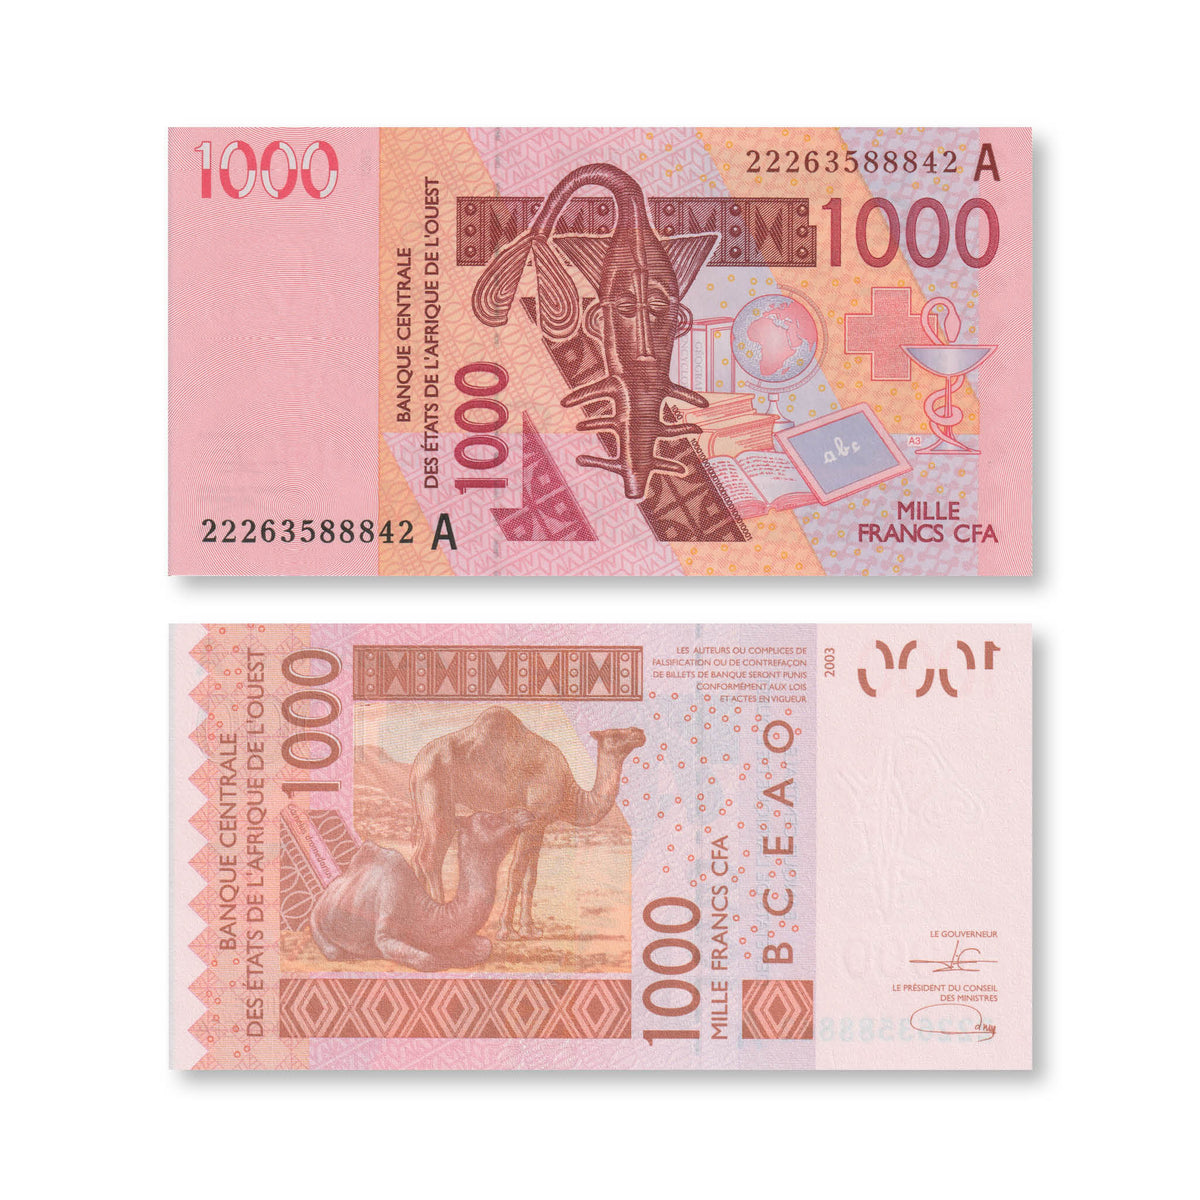 West African States, Ivory Coast, 1000 Francs, 2022, B121Av, P115A, UNC - Robert's World Money - World Banknotes